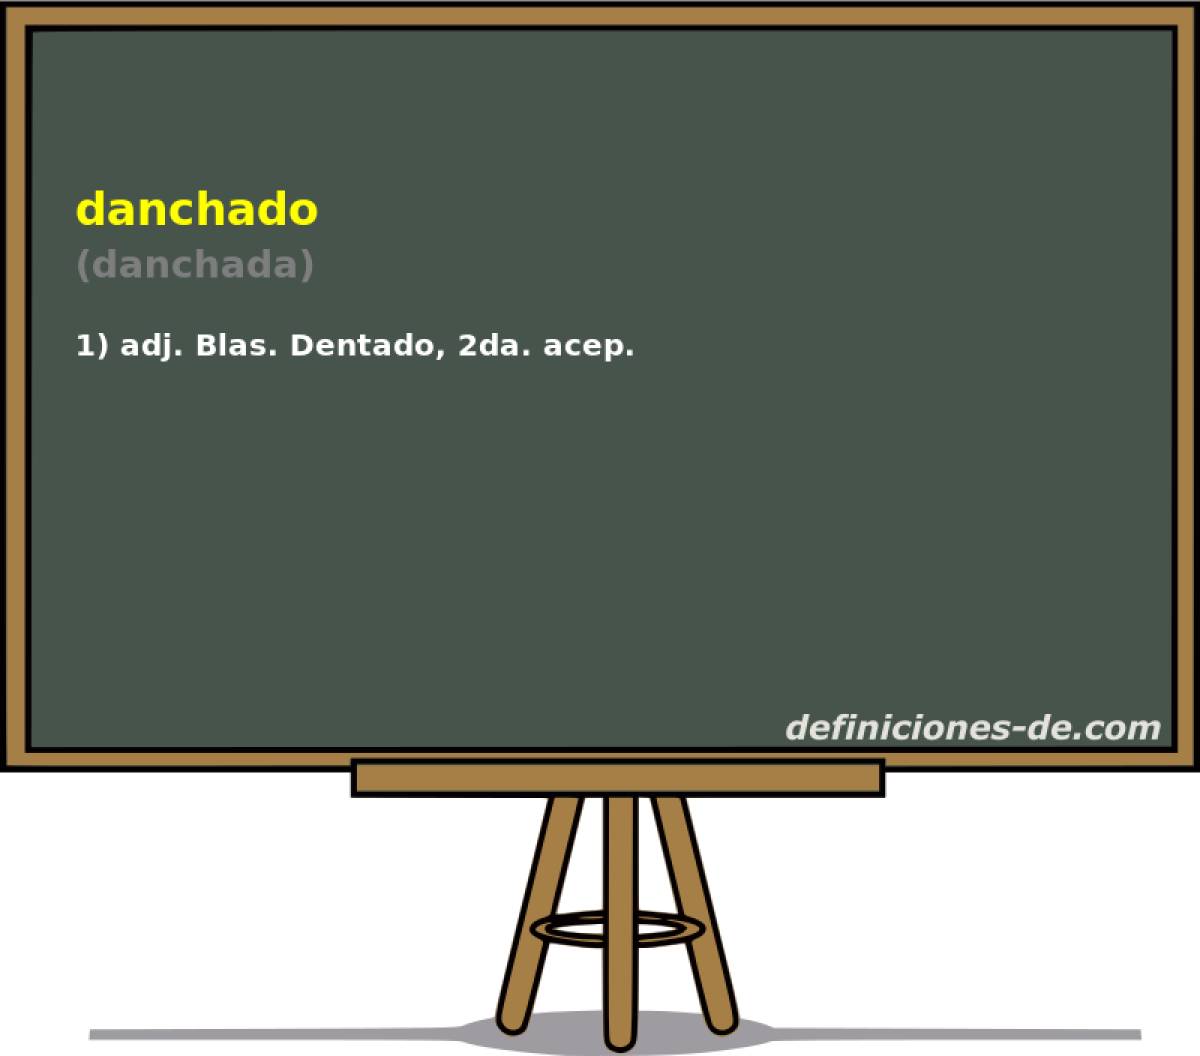 danchado (danchada)